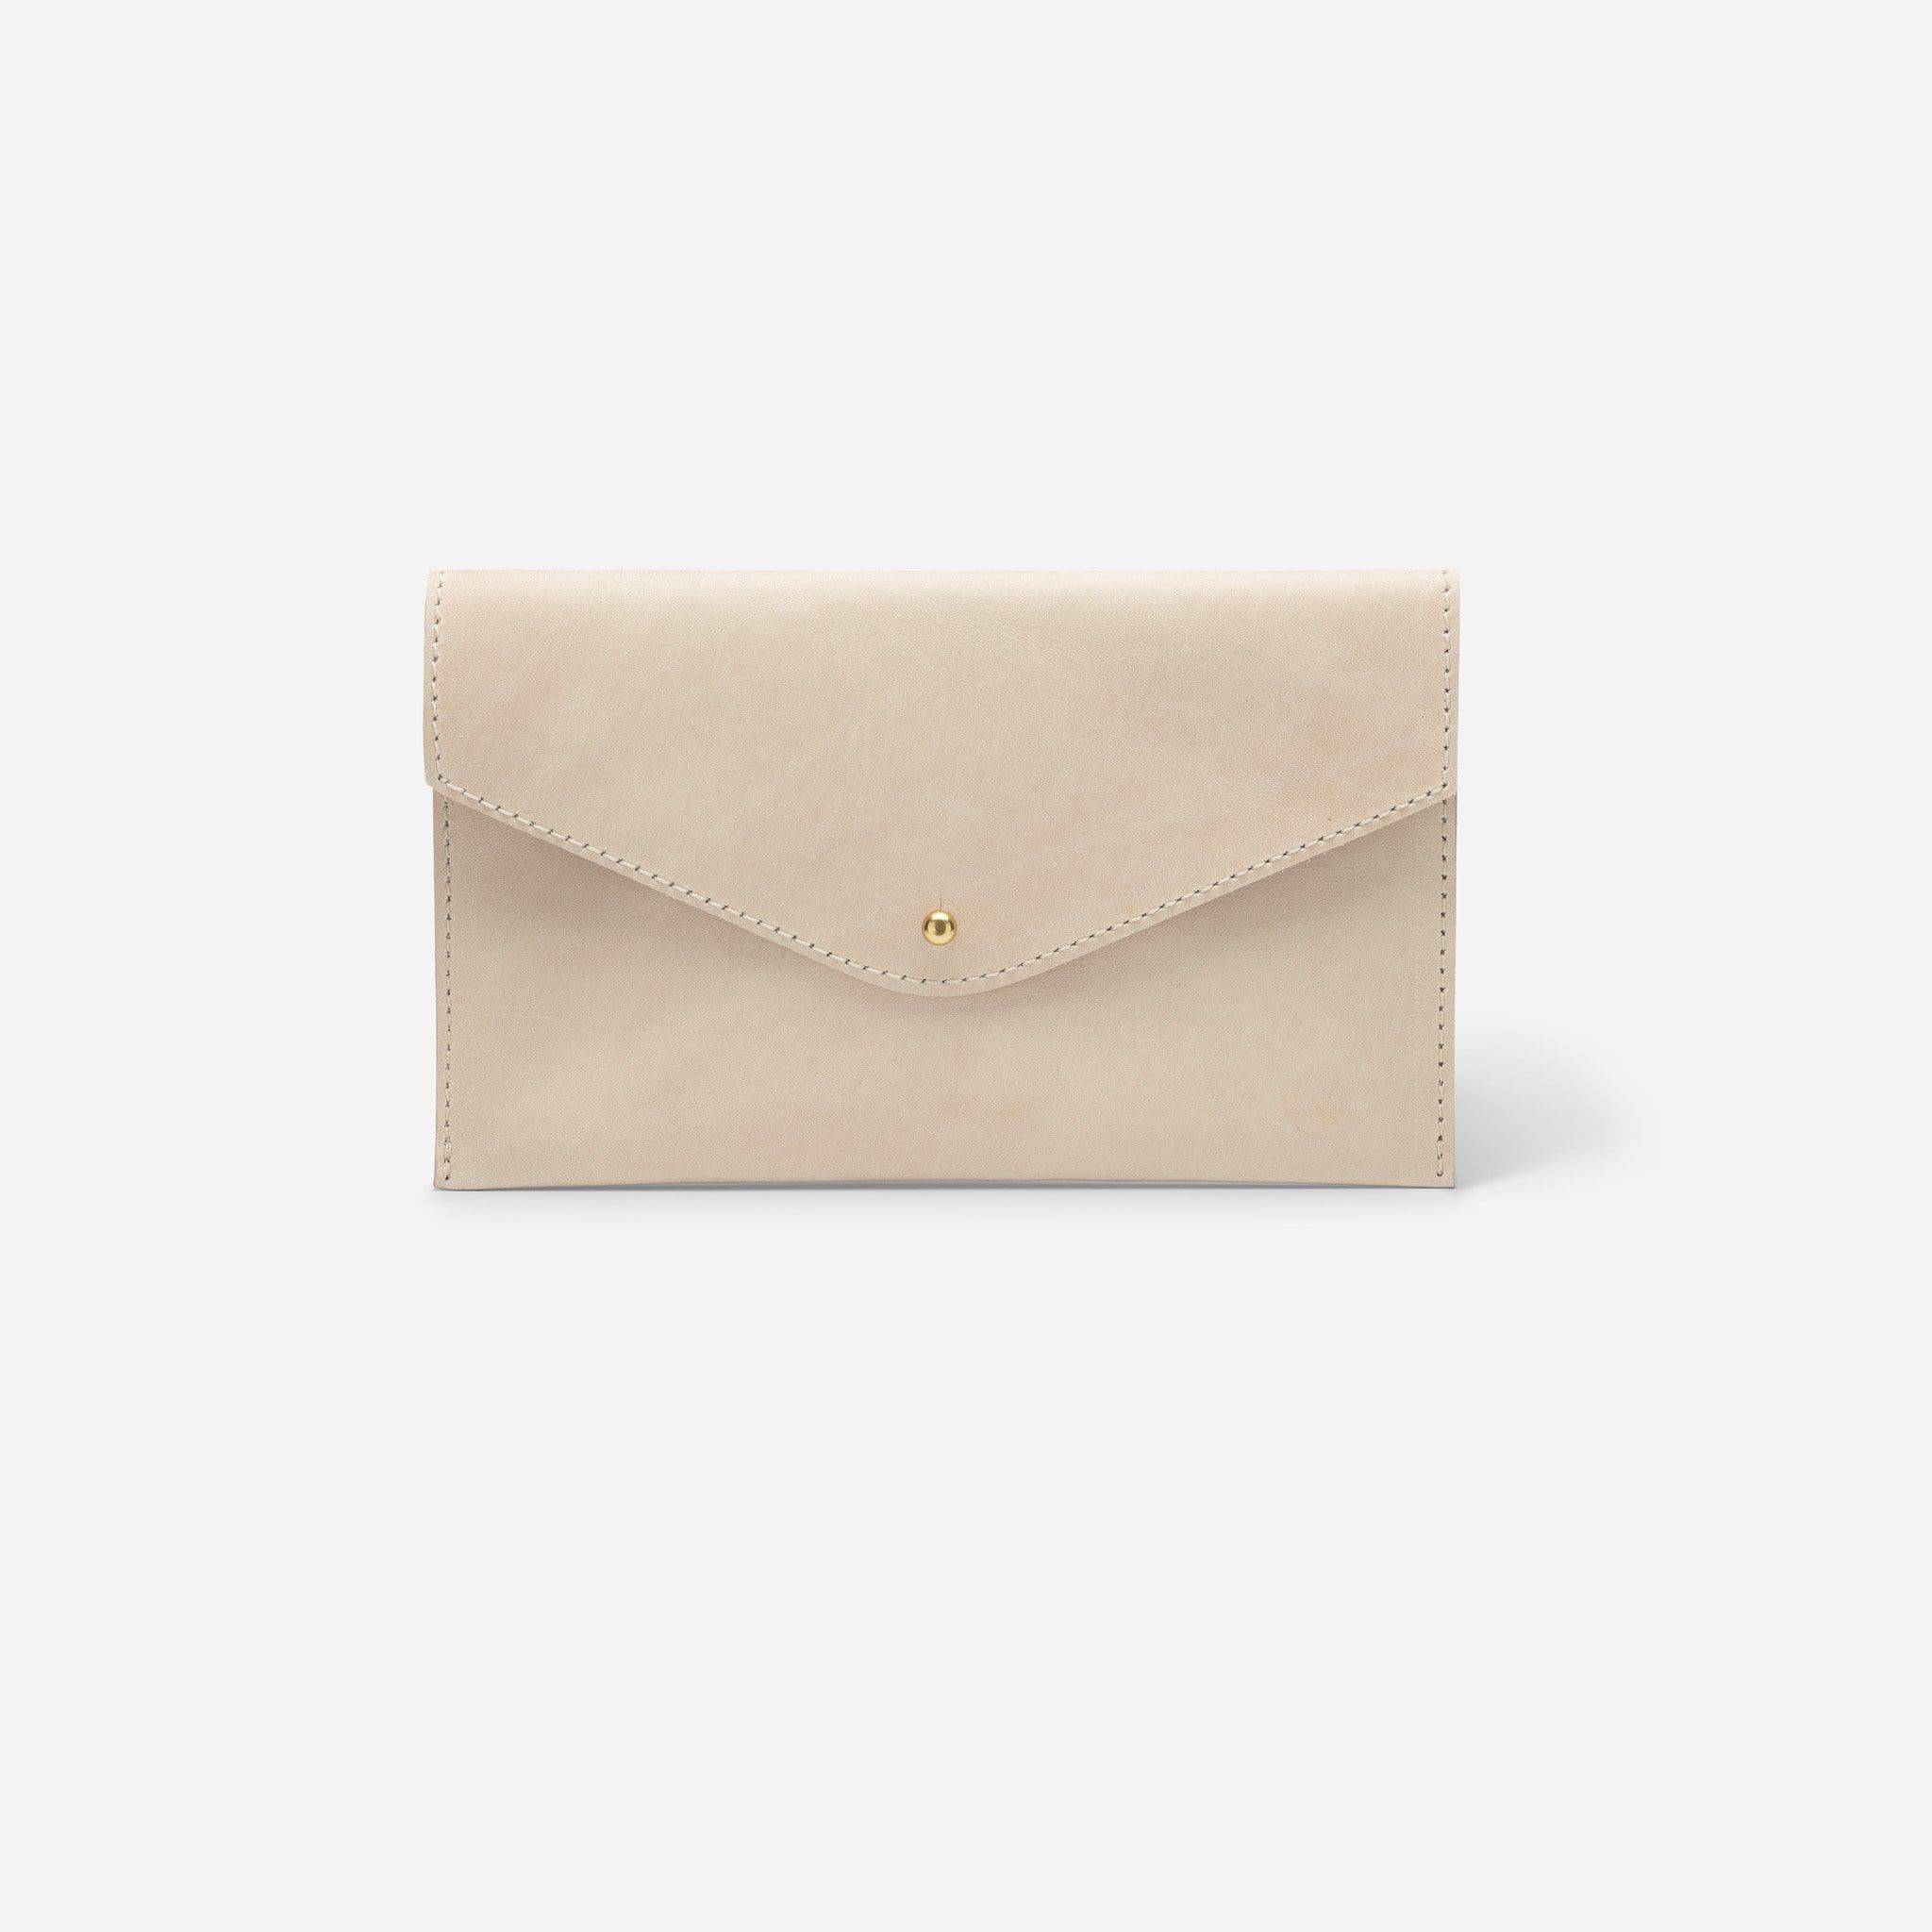 Abeba Leather Envelope | Parker Clay